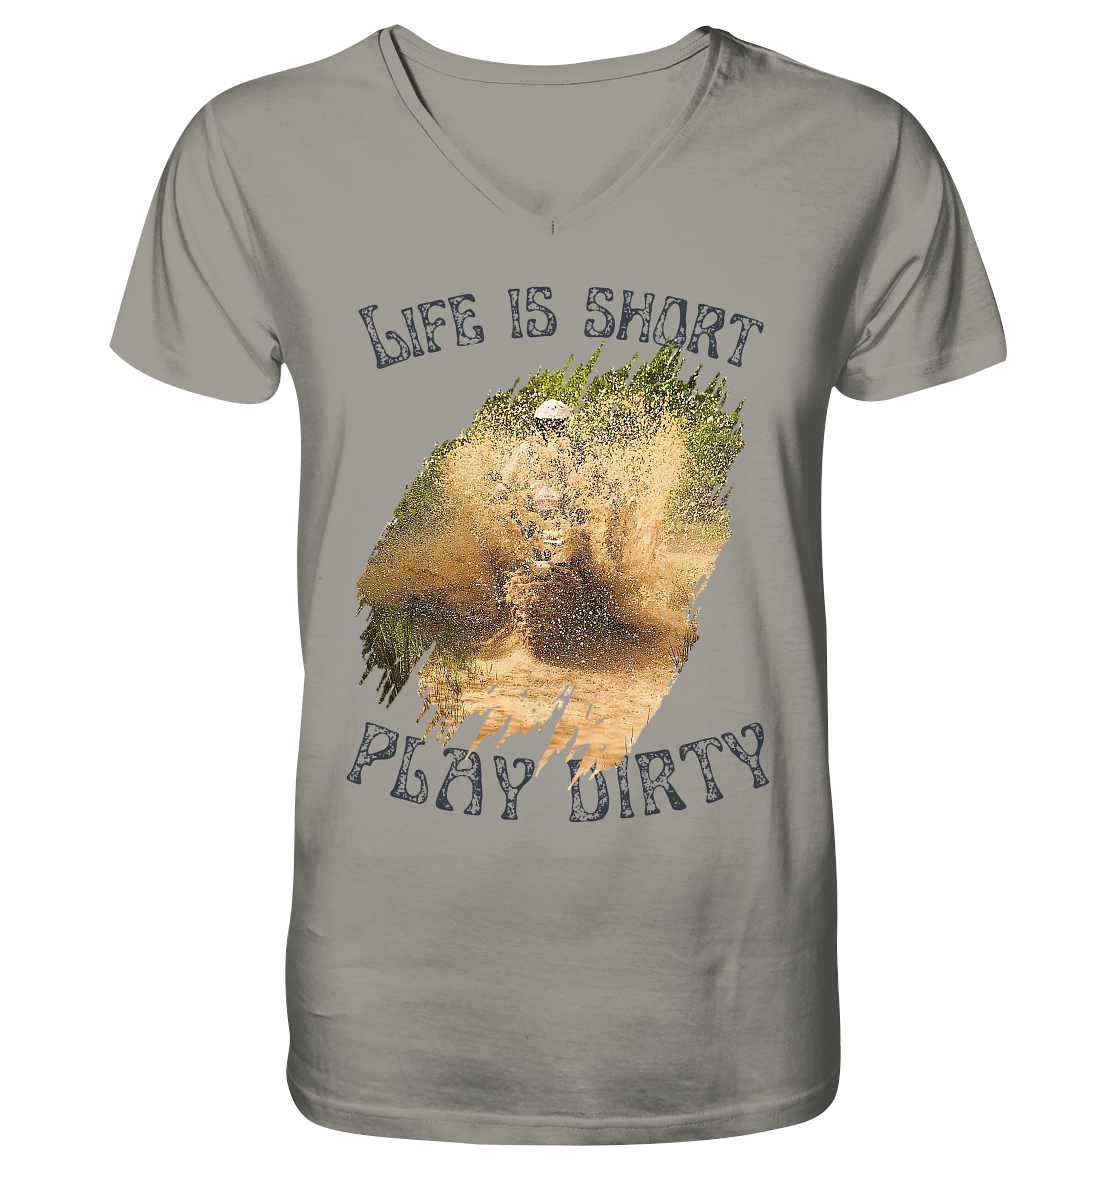 "Life is short - play dirty" _ dunkles Design | Shirt mit V-Ausschnitt für Jürgen P.